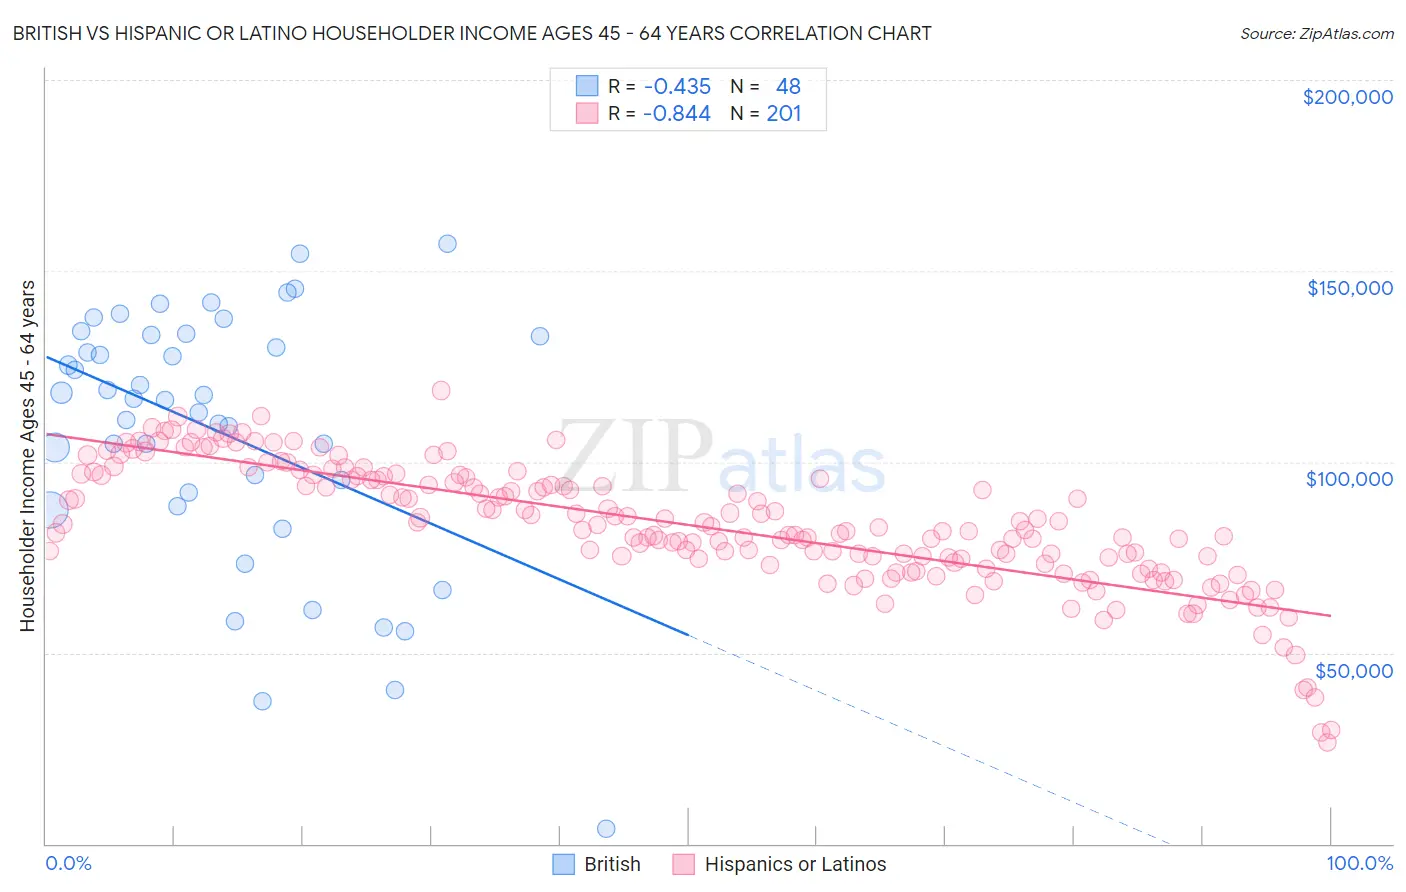 British vs Hispanic or Latino Householder Income Ages 45 - 64 years